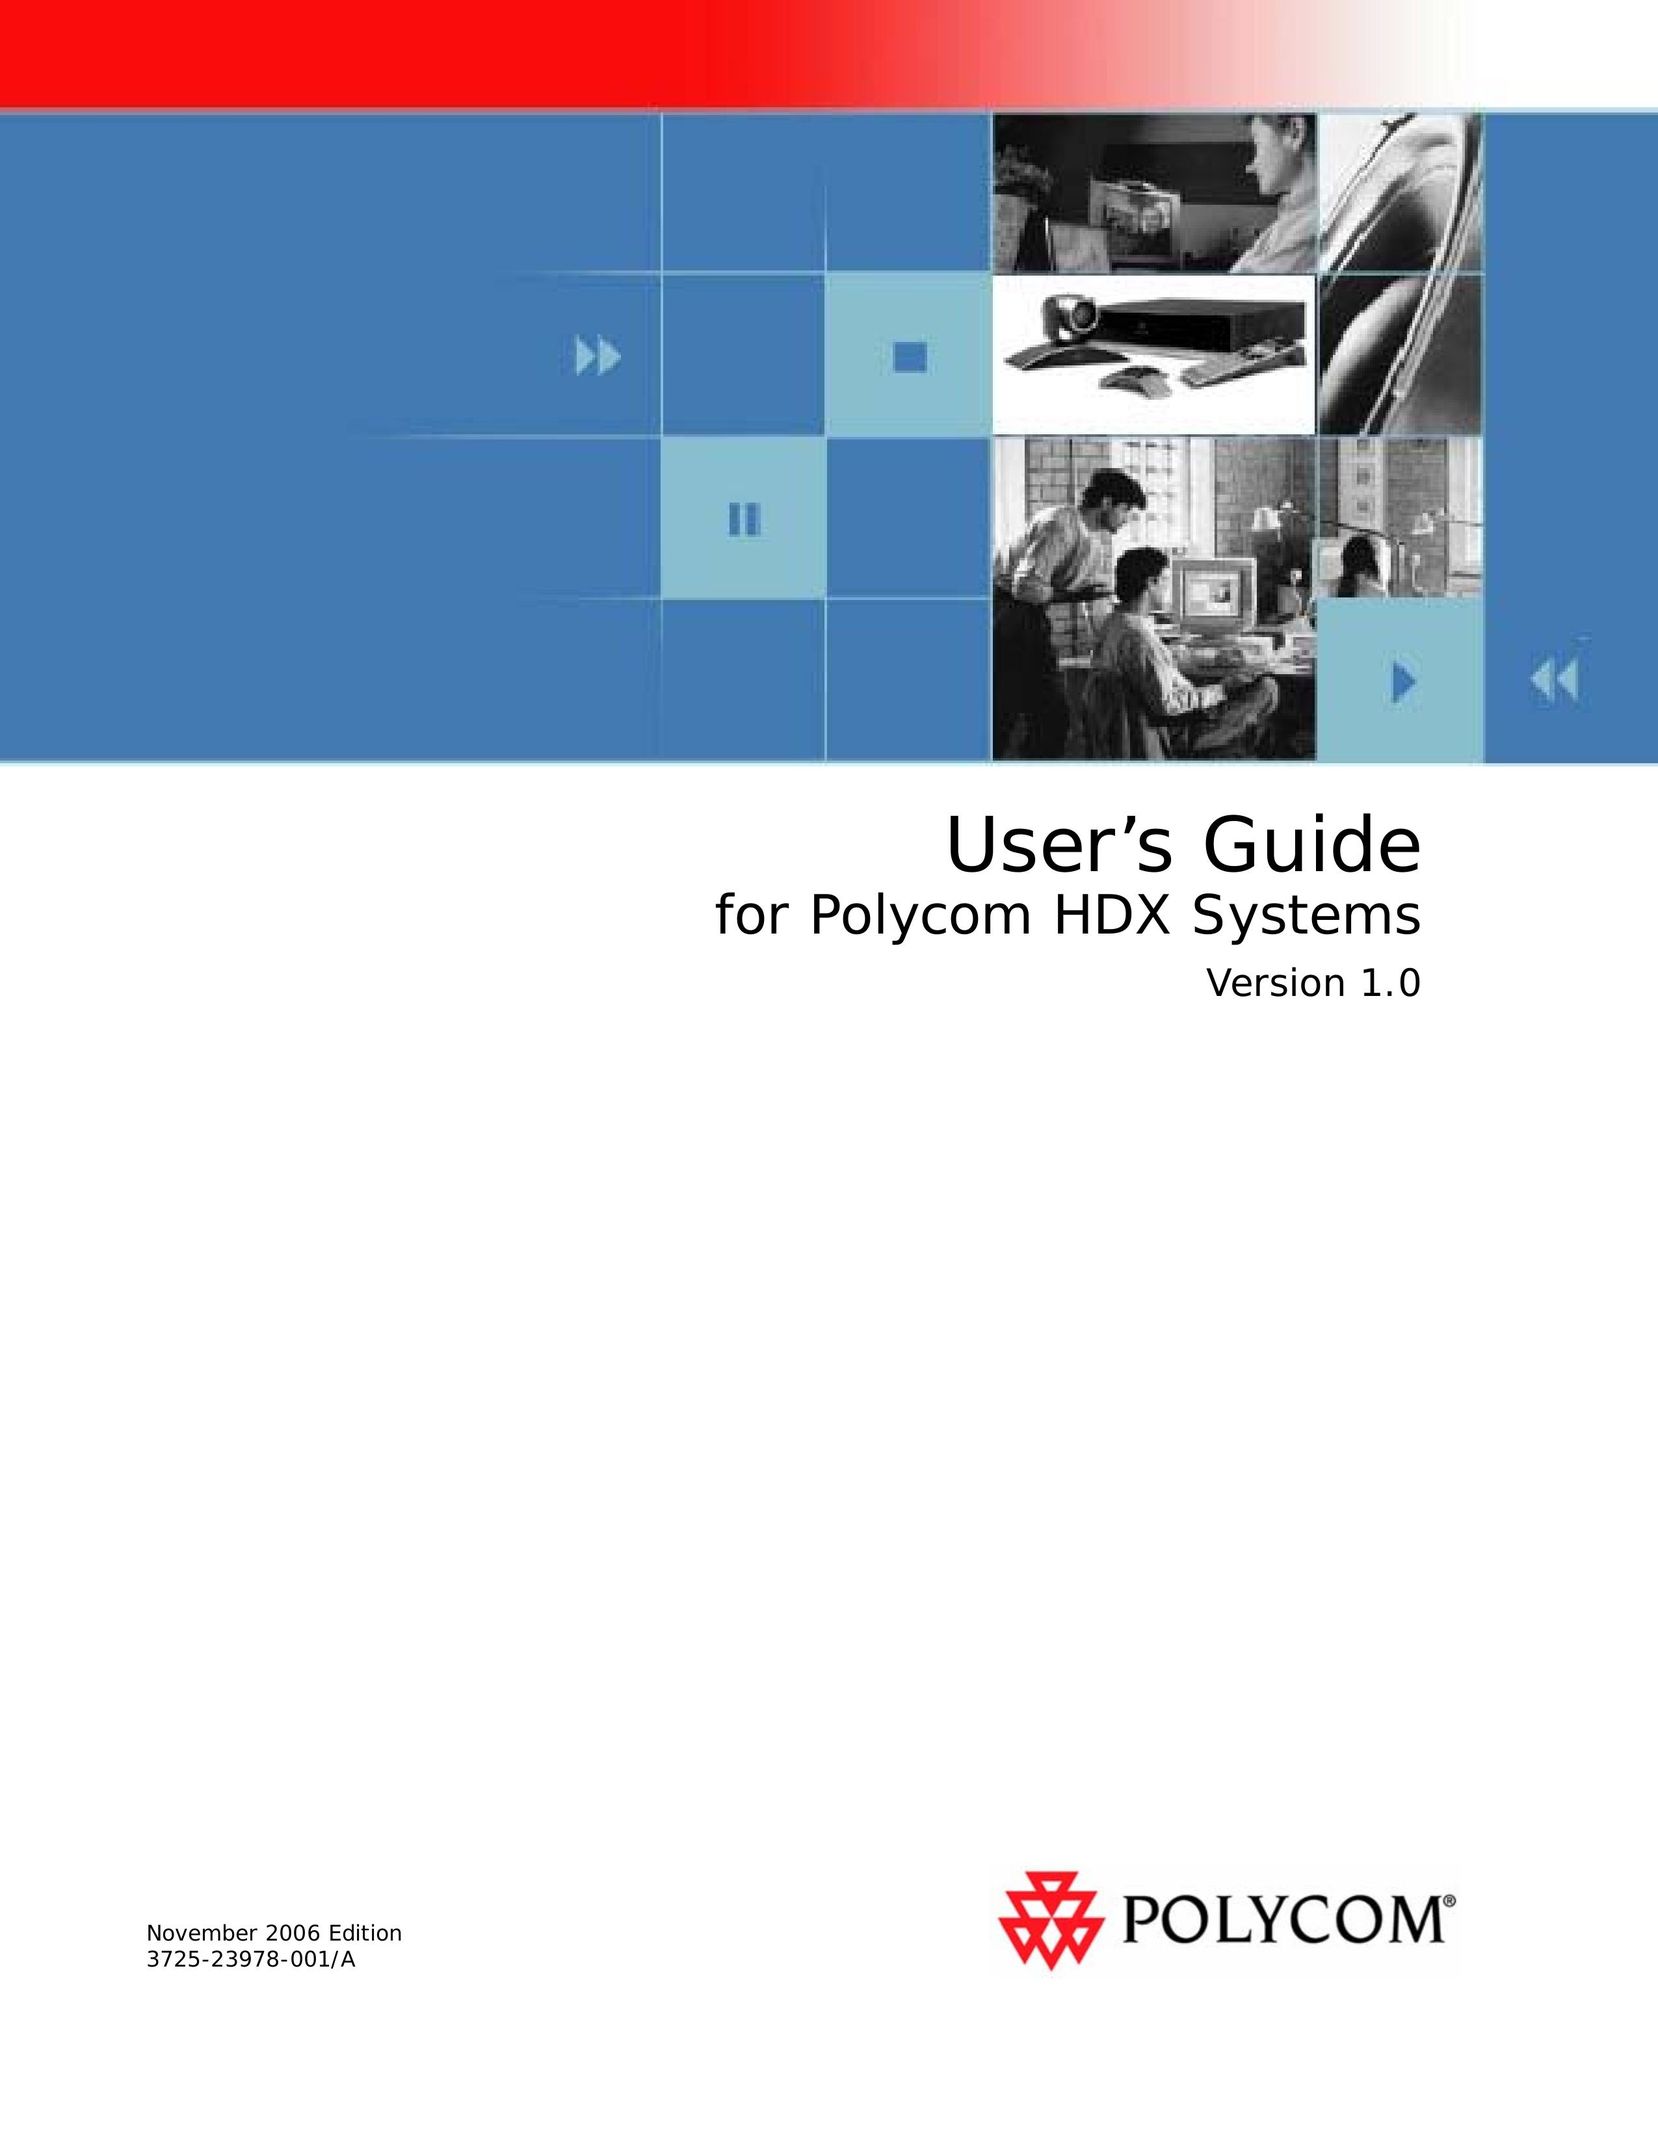 Polycom HDX Systems Universal Remote User Manual